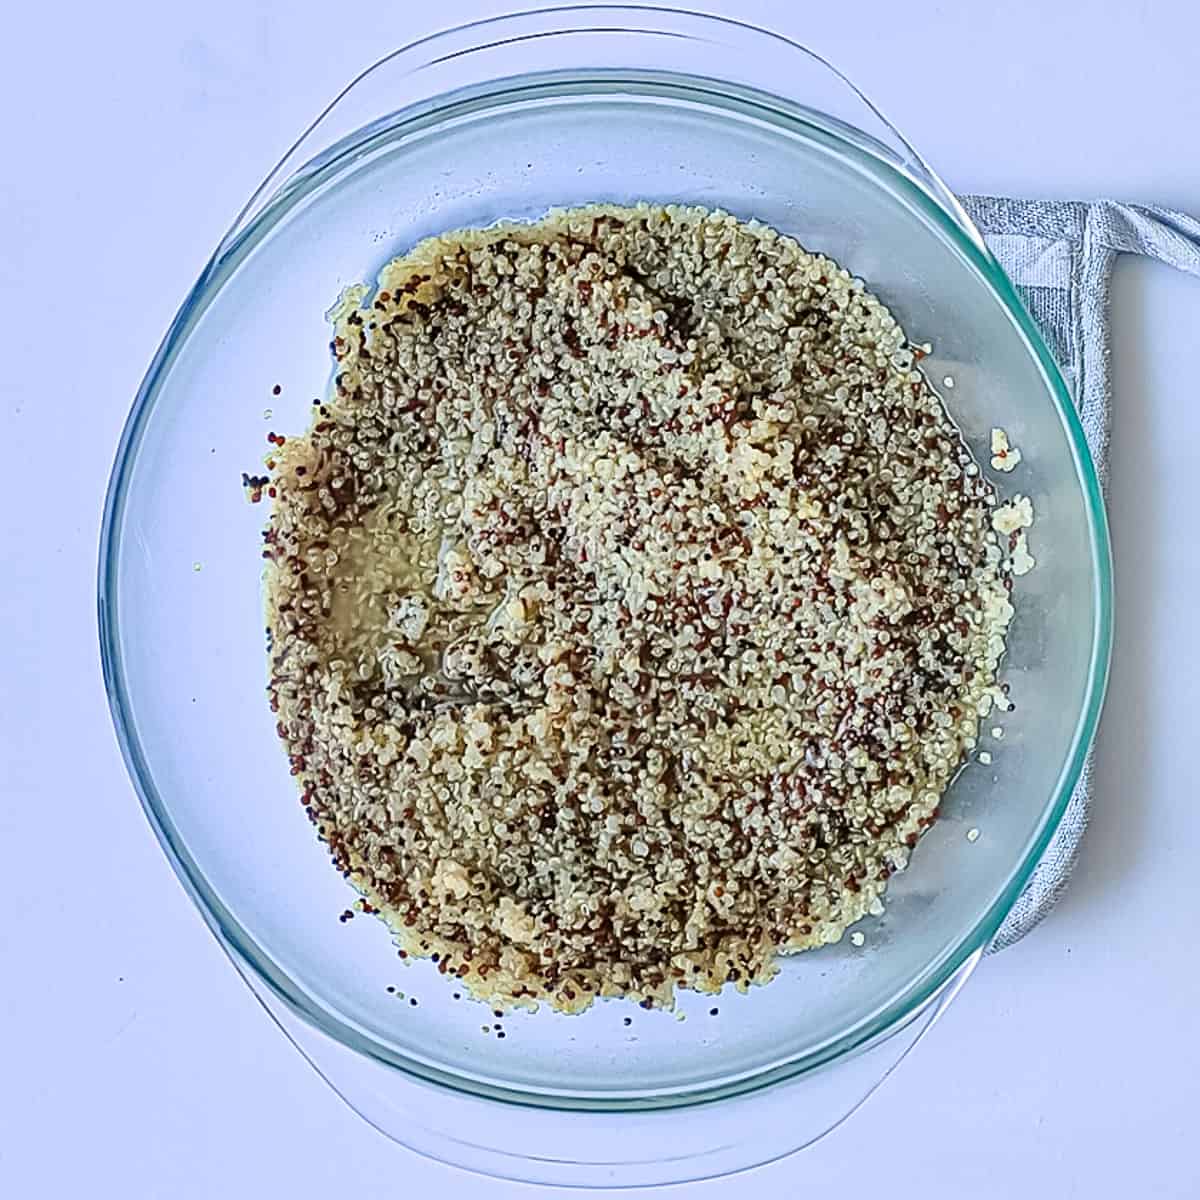 Half-cooked quinoa in a glass bowl.